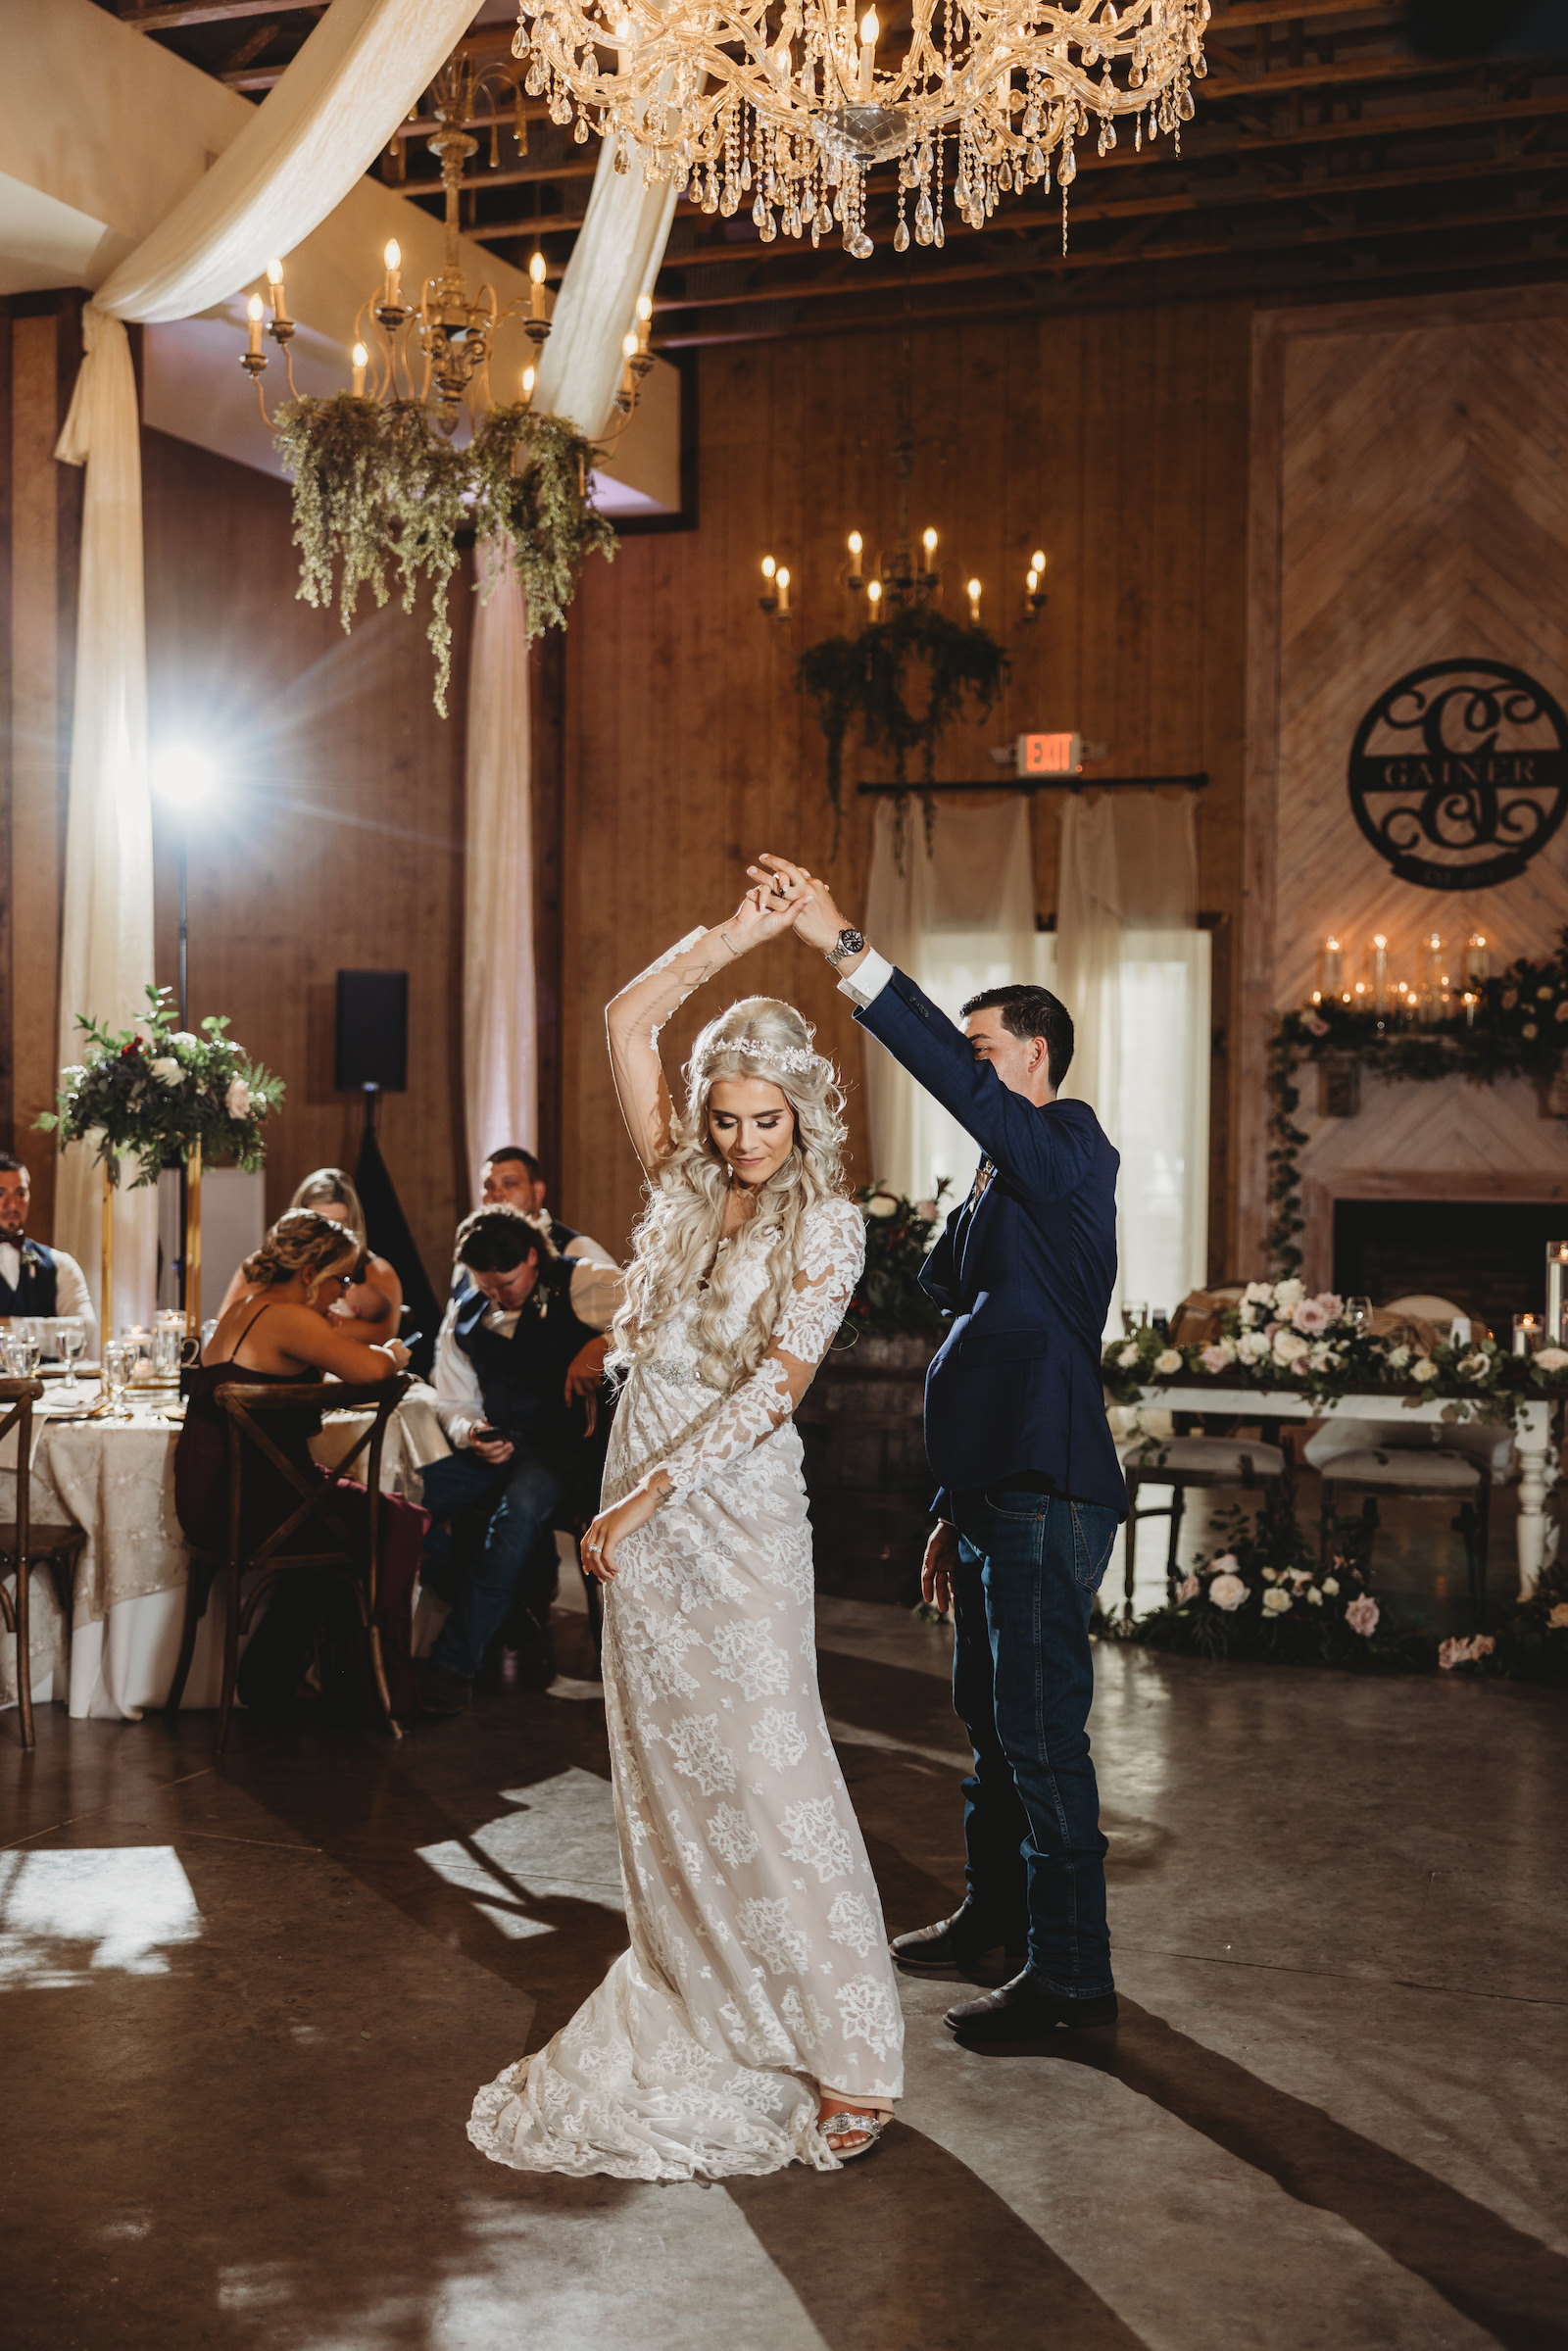 Bride and Groom First Dance in Rustic Wedding Reception Portrait | Covington Farm